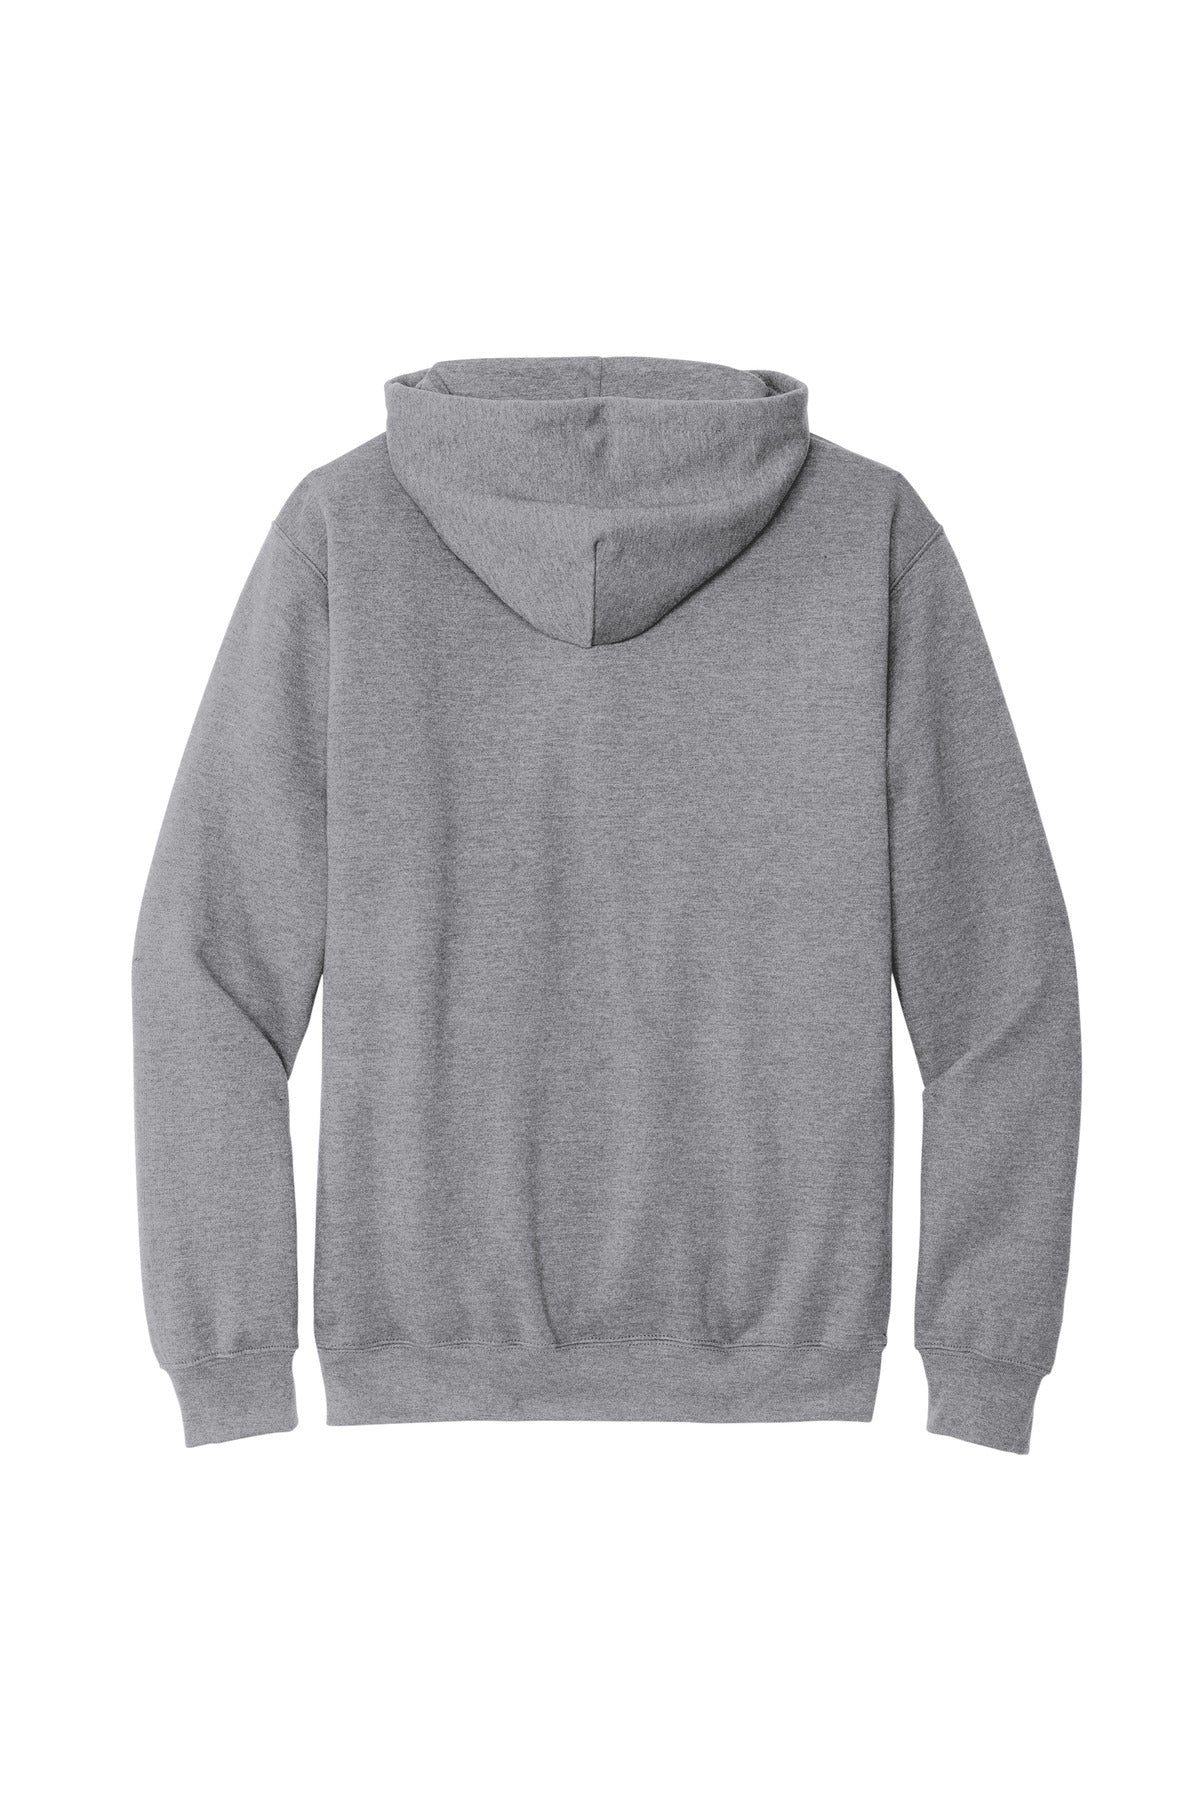 Gildan Softstyle Pullover Hooded Sweatshirt SF500 - BT Imprintables Shirts